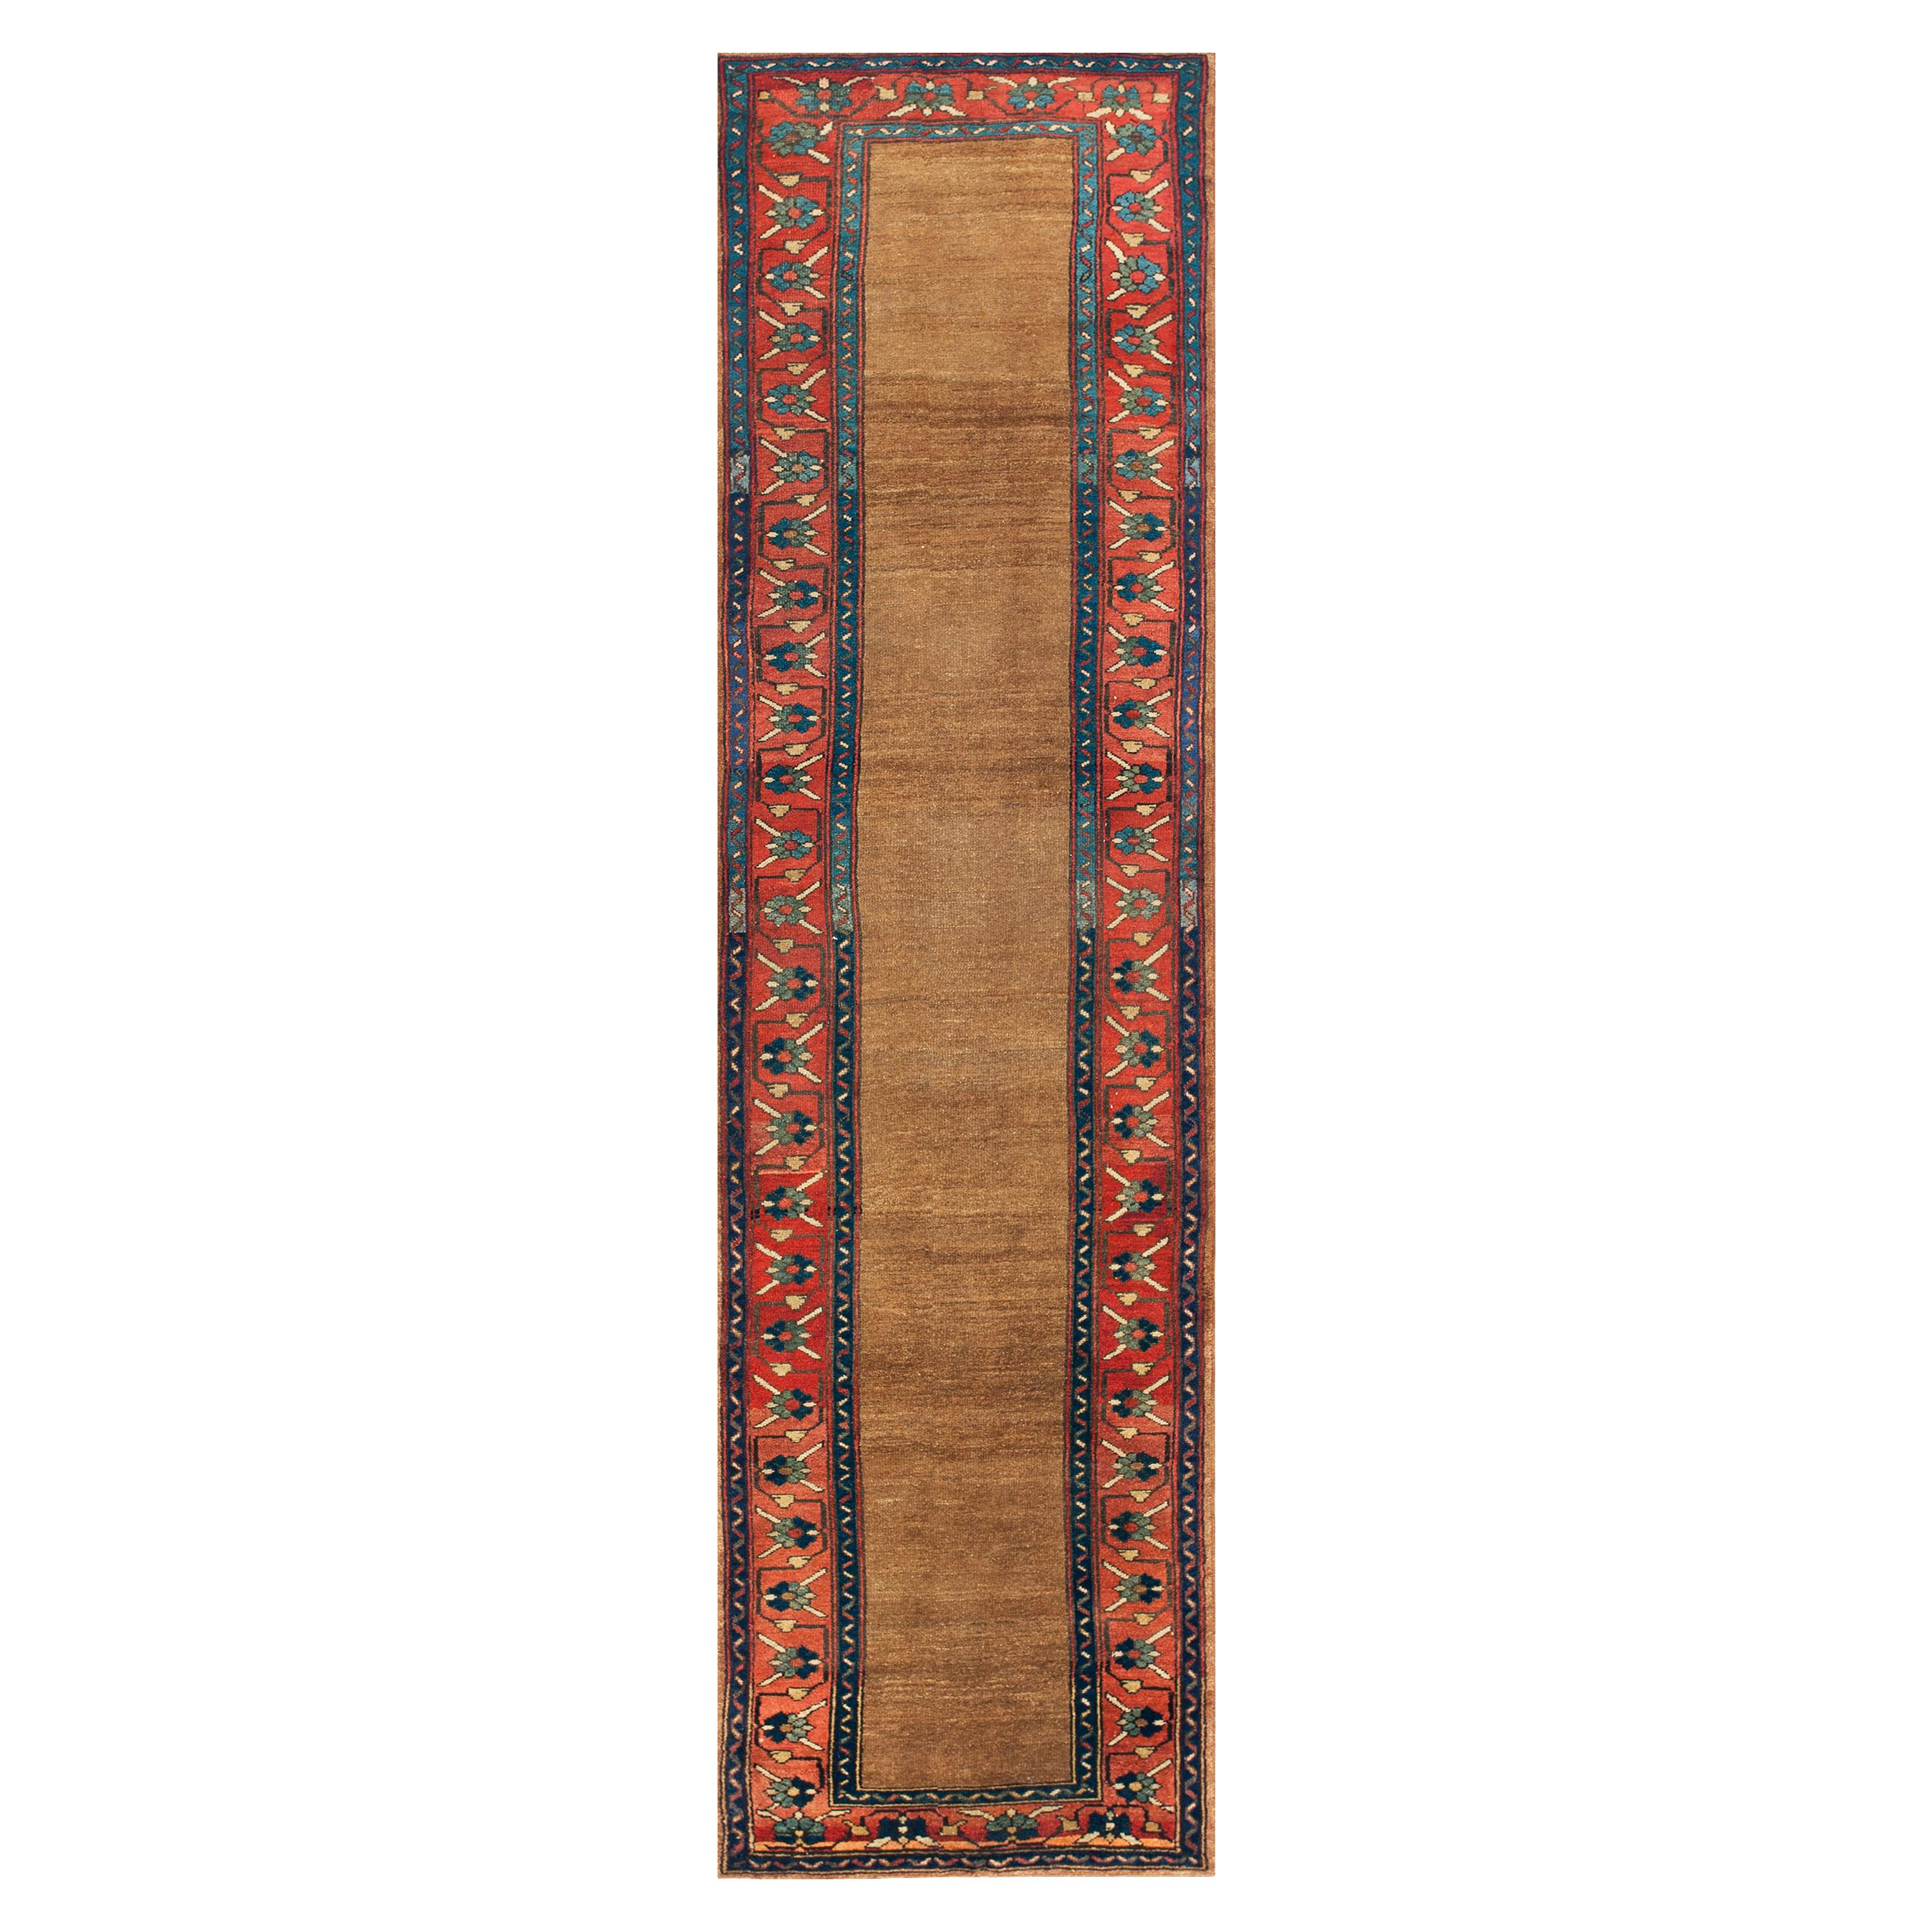 Late 19th Century W. Persian Kurdish Runner Carpet ( 3' x 10' - 91 x 328 ) For Sale